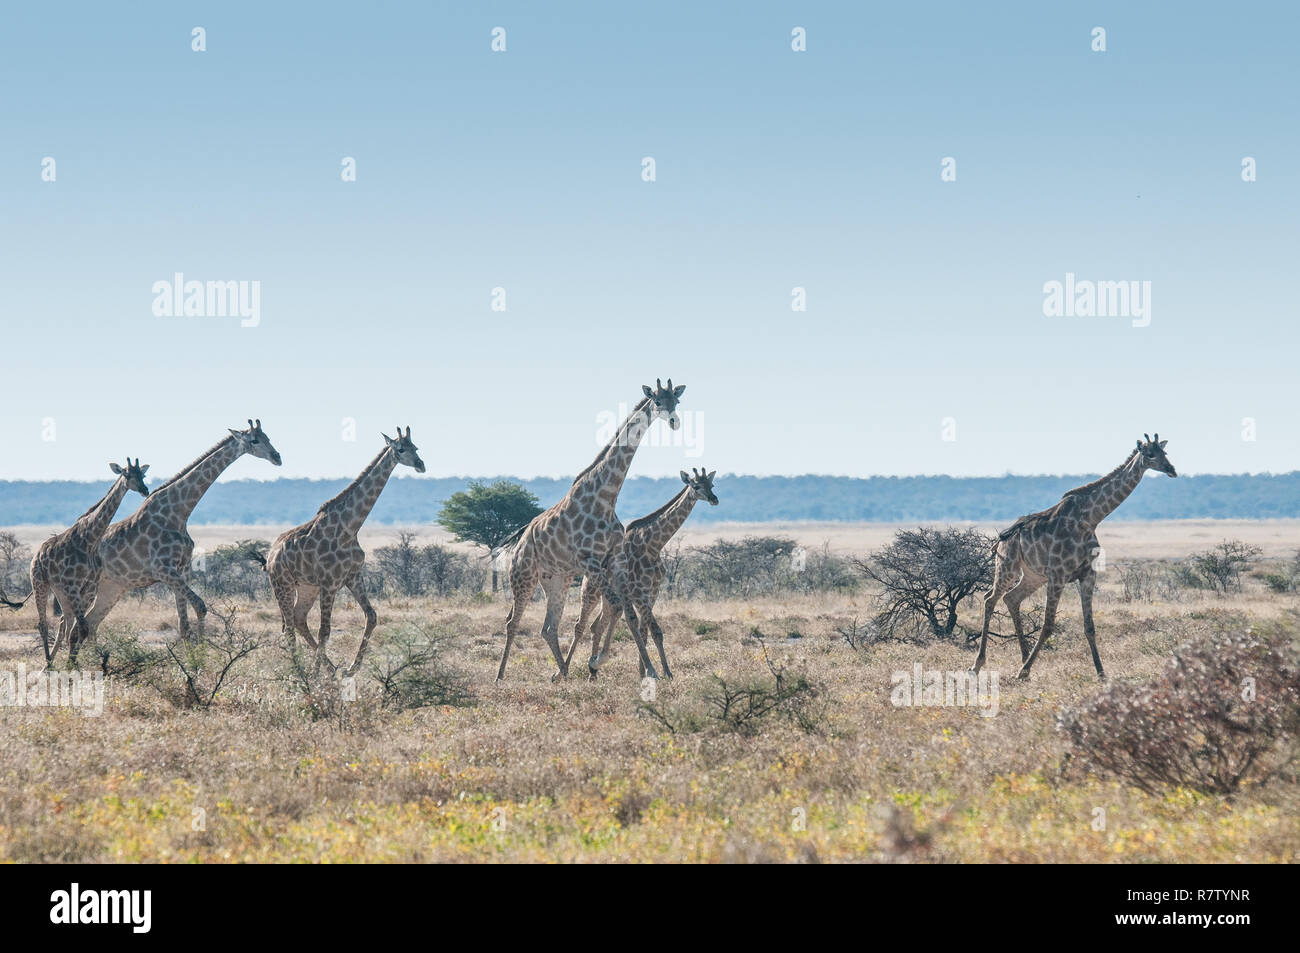 Giraffes running at the savanna Stock Photo